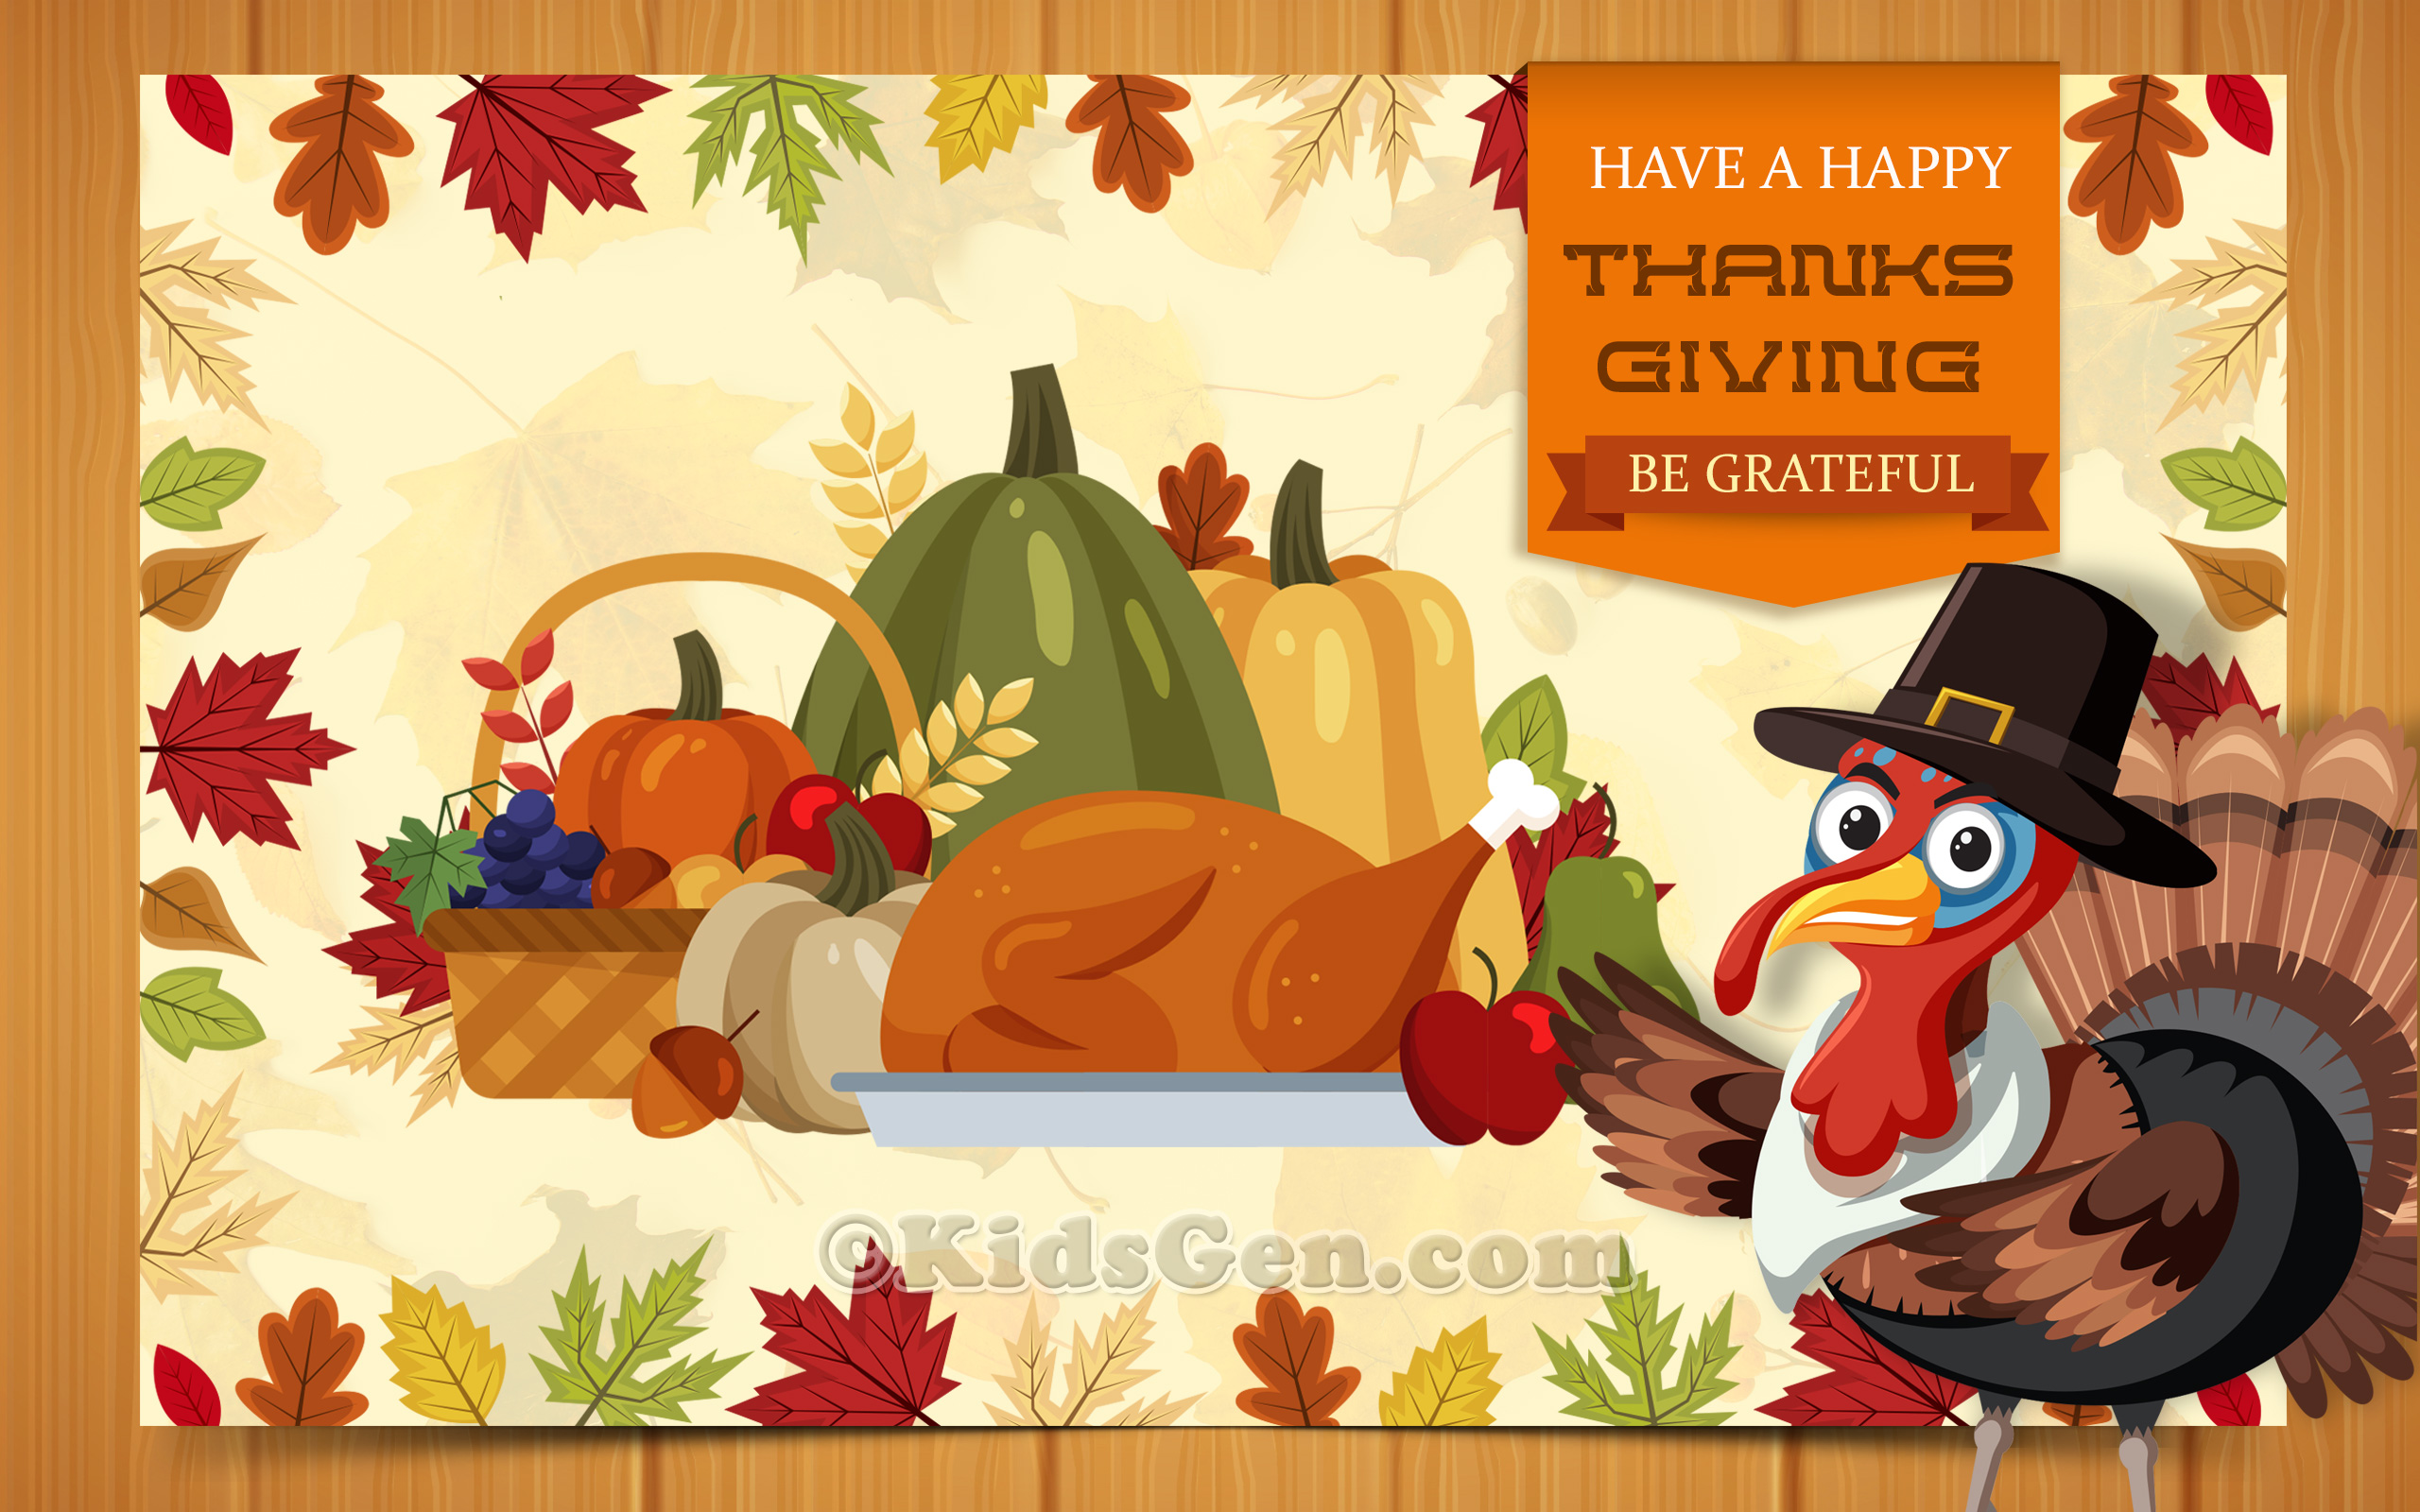 Happy Thanksgiving Wallpaper 4K, 5K, Thanksgiving Day